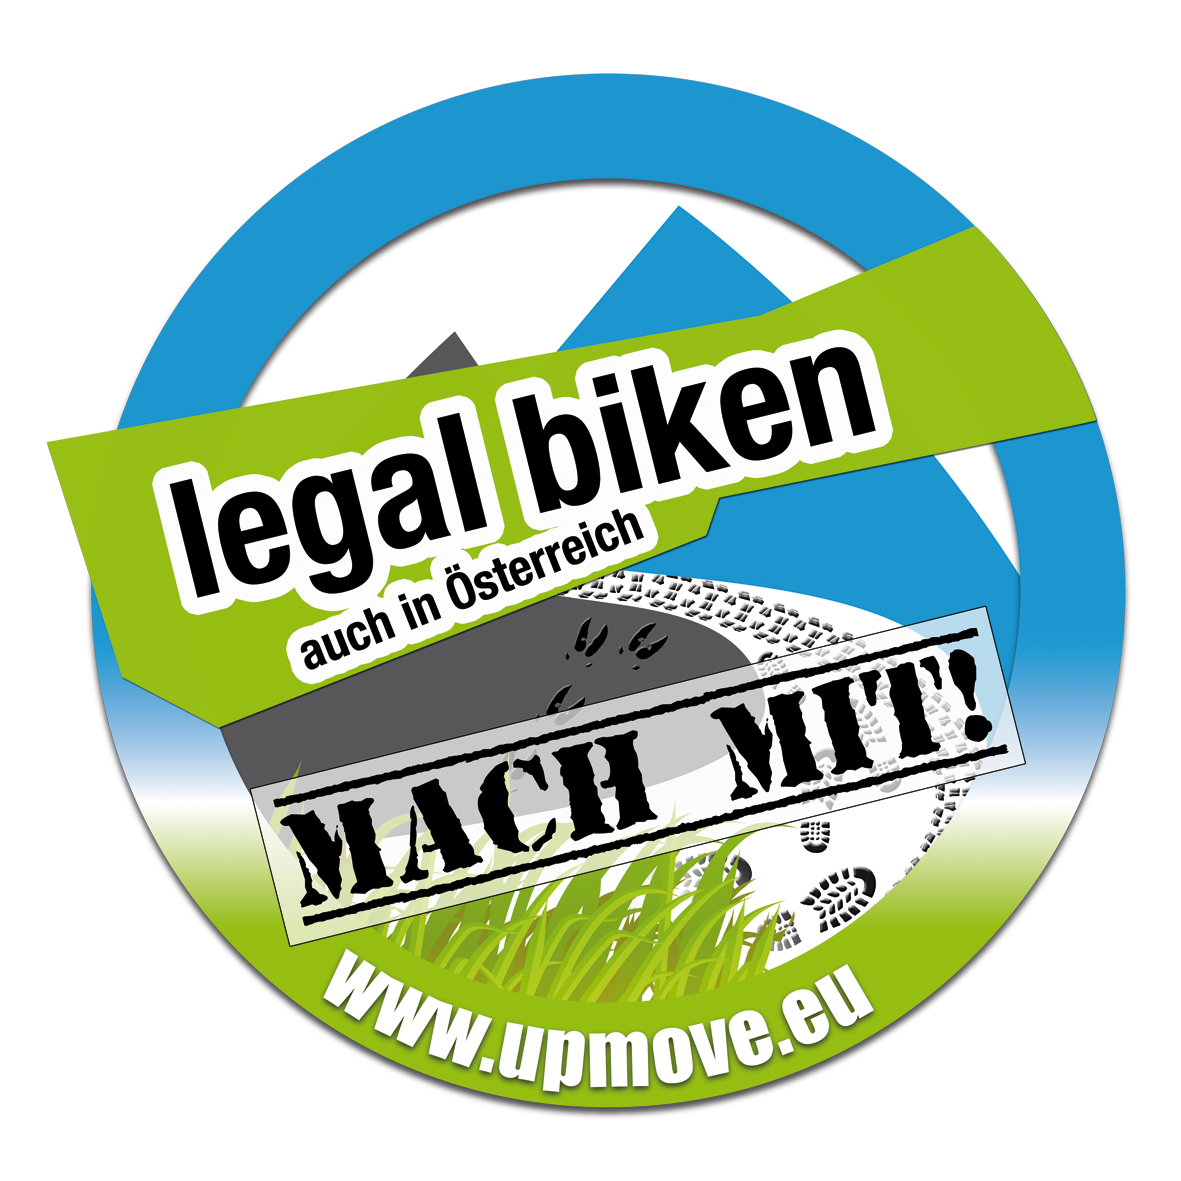 upmove legal biken machmit